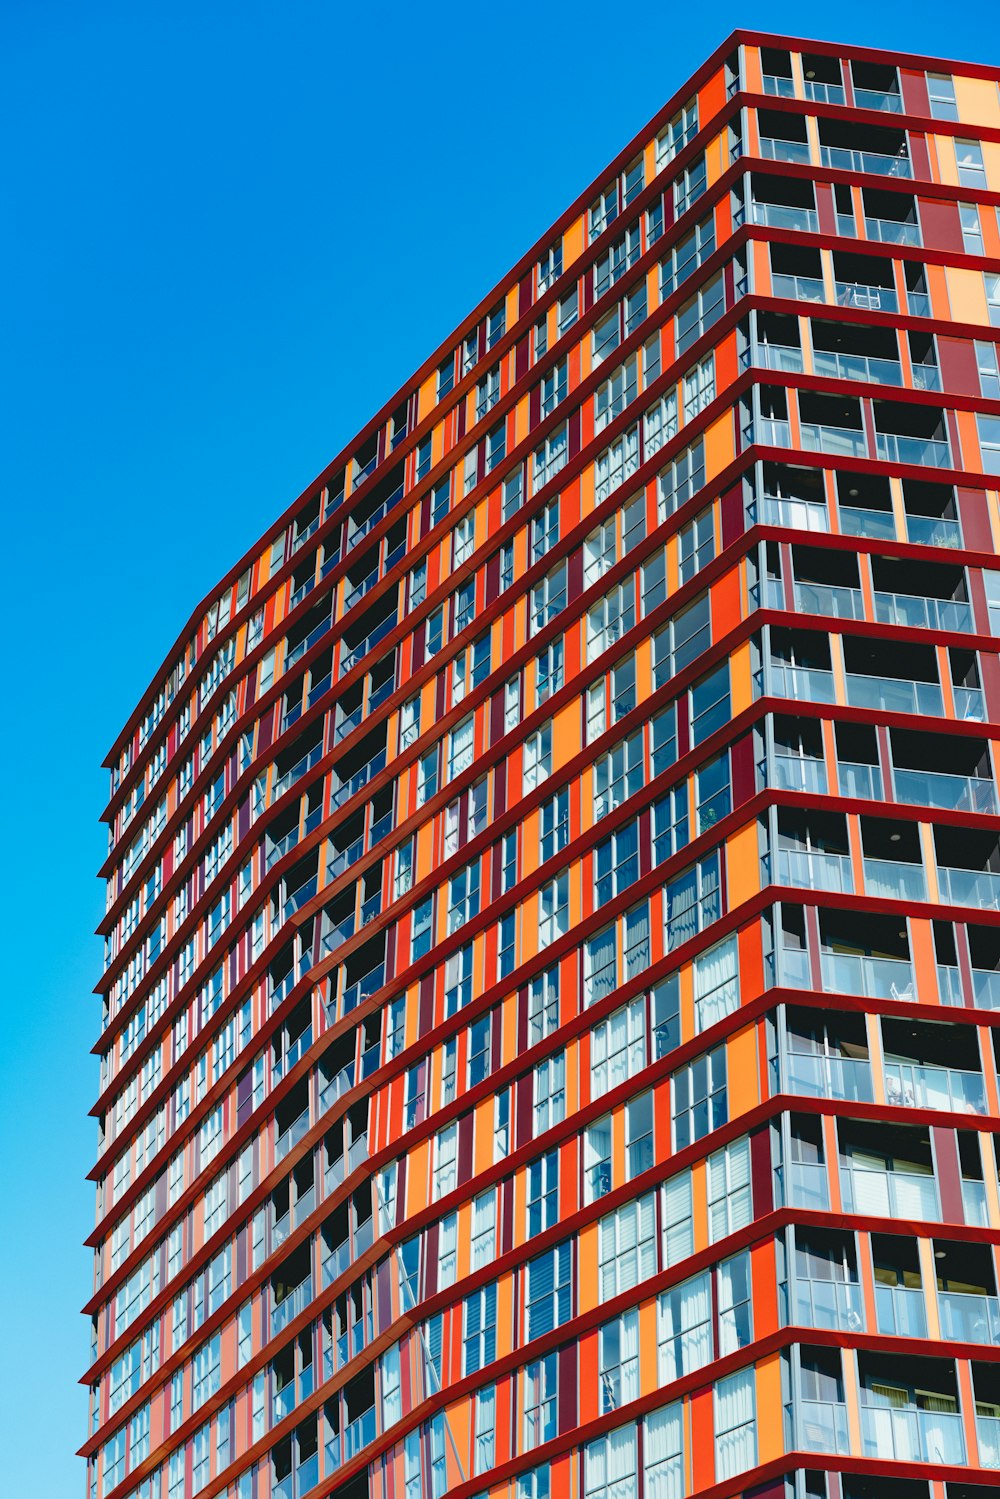 Orange concrete building photo – Free Urban Image on Unsplash